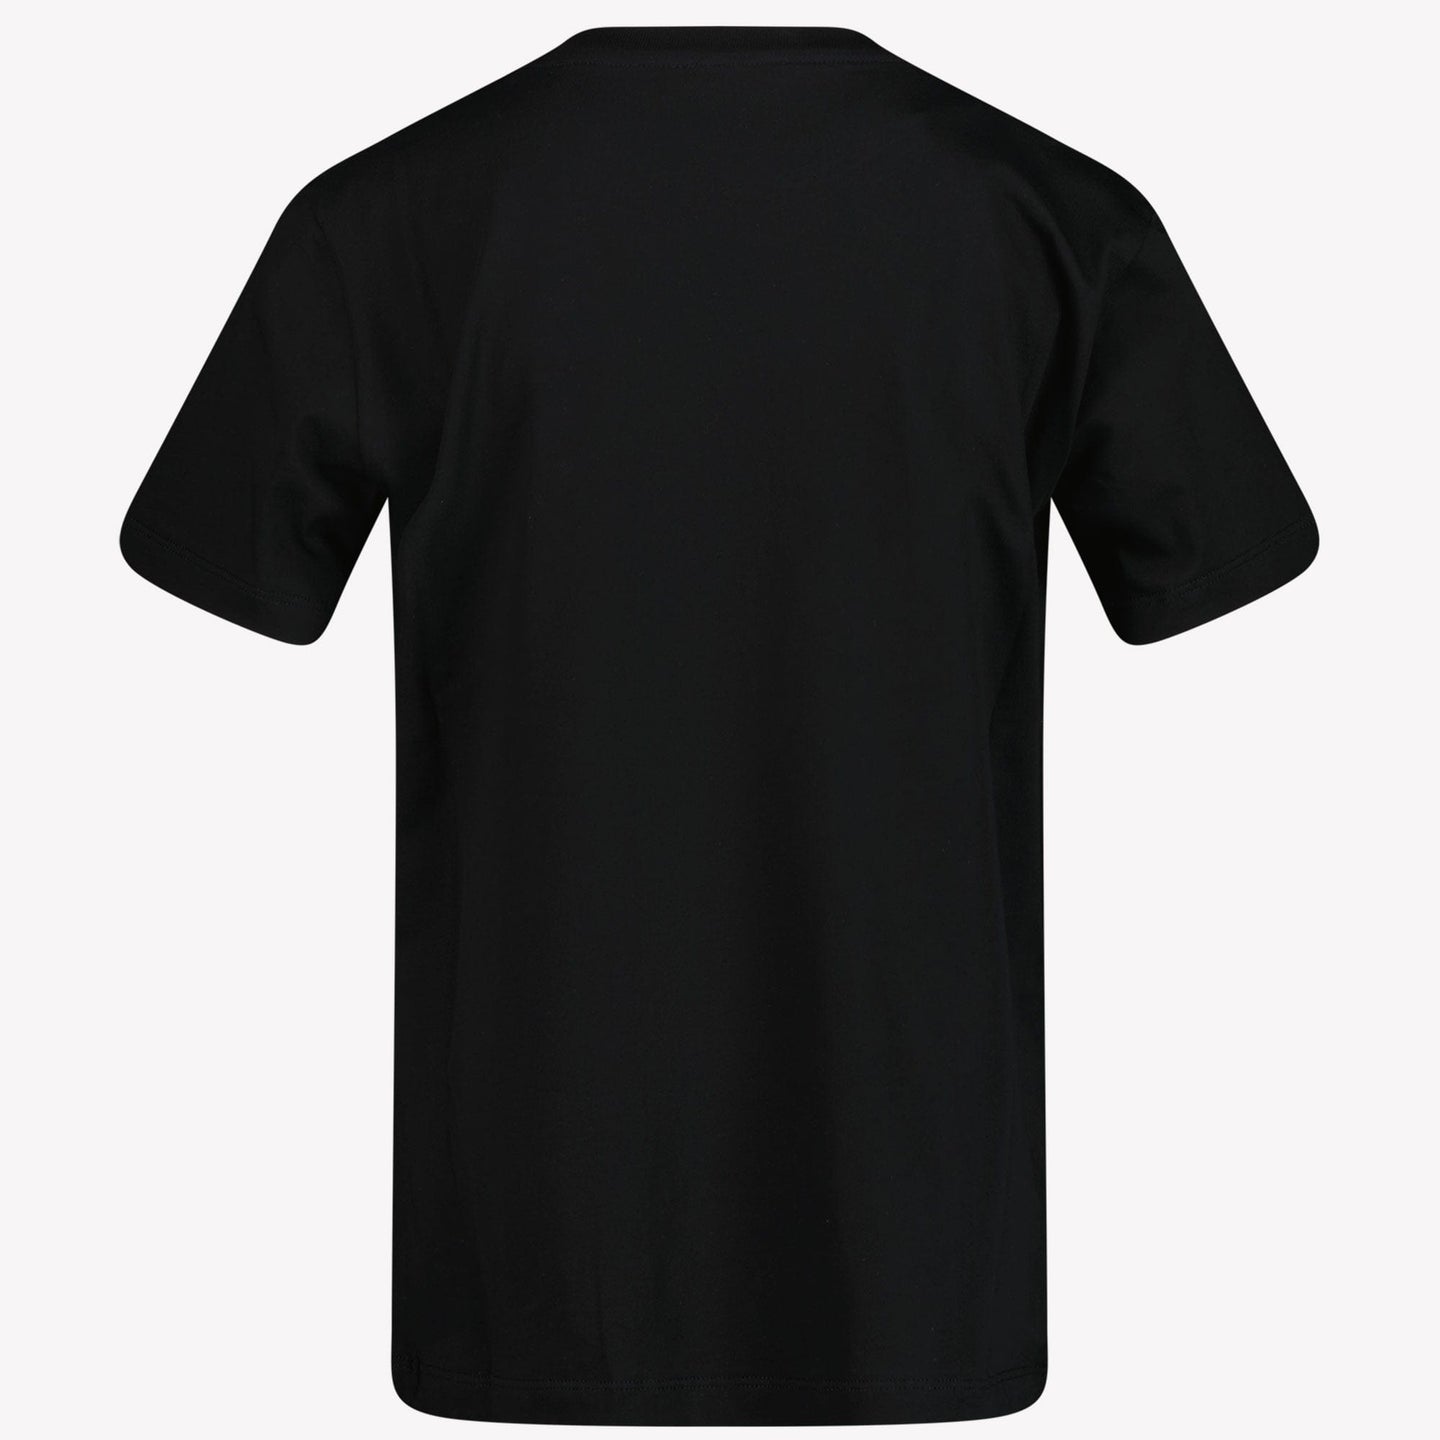 Balmain Unisex tričko černé